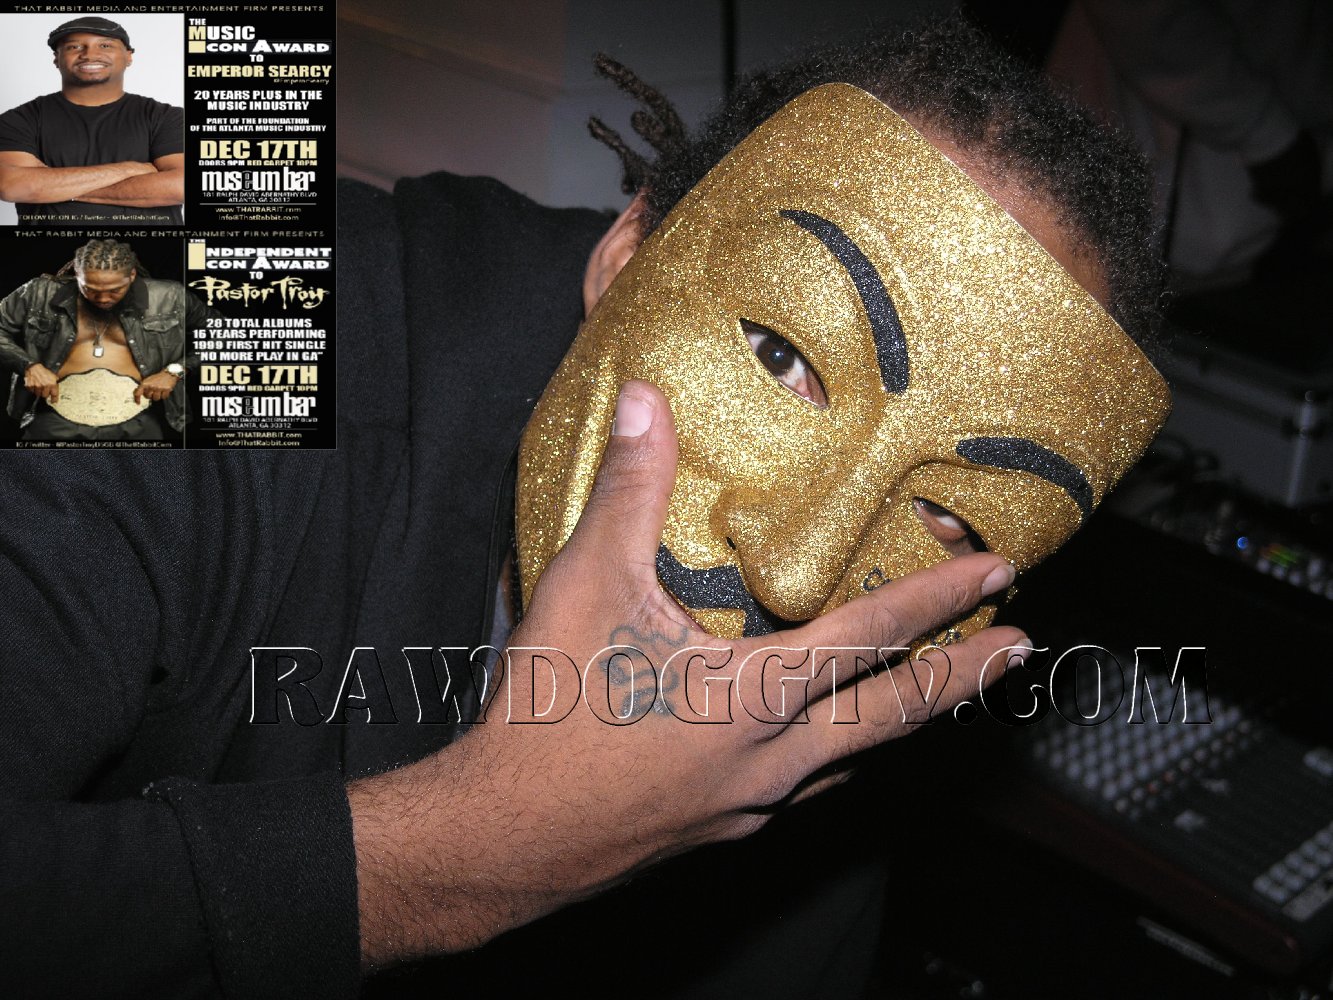 ThatRabbit Magazine Photos-ATL Legends Reunion-The Music Icon Award-Museum Bar Atlanta-Ray Hamilton- dec 17 2015 RAWDOGGTV 305-490-2182 (71)